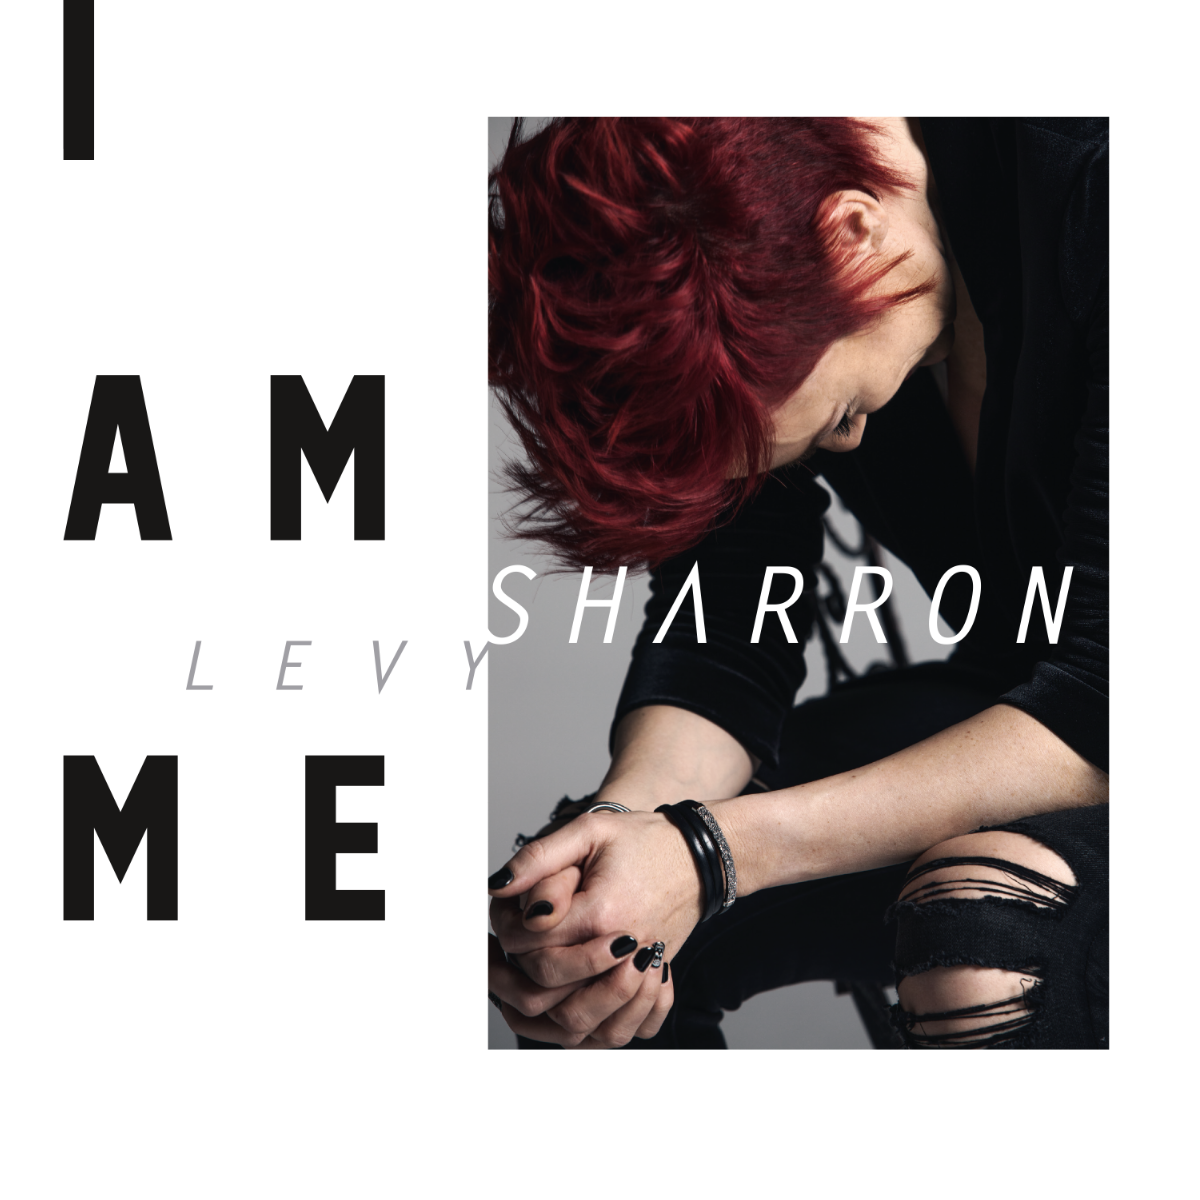 Sharron Levy - I AM ME (CD)